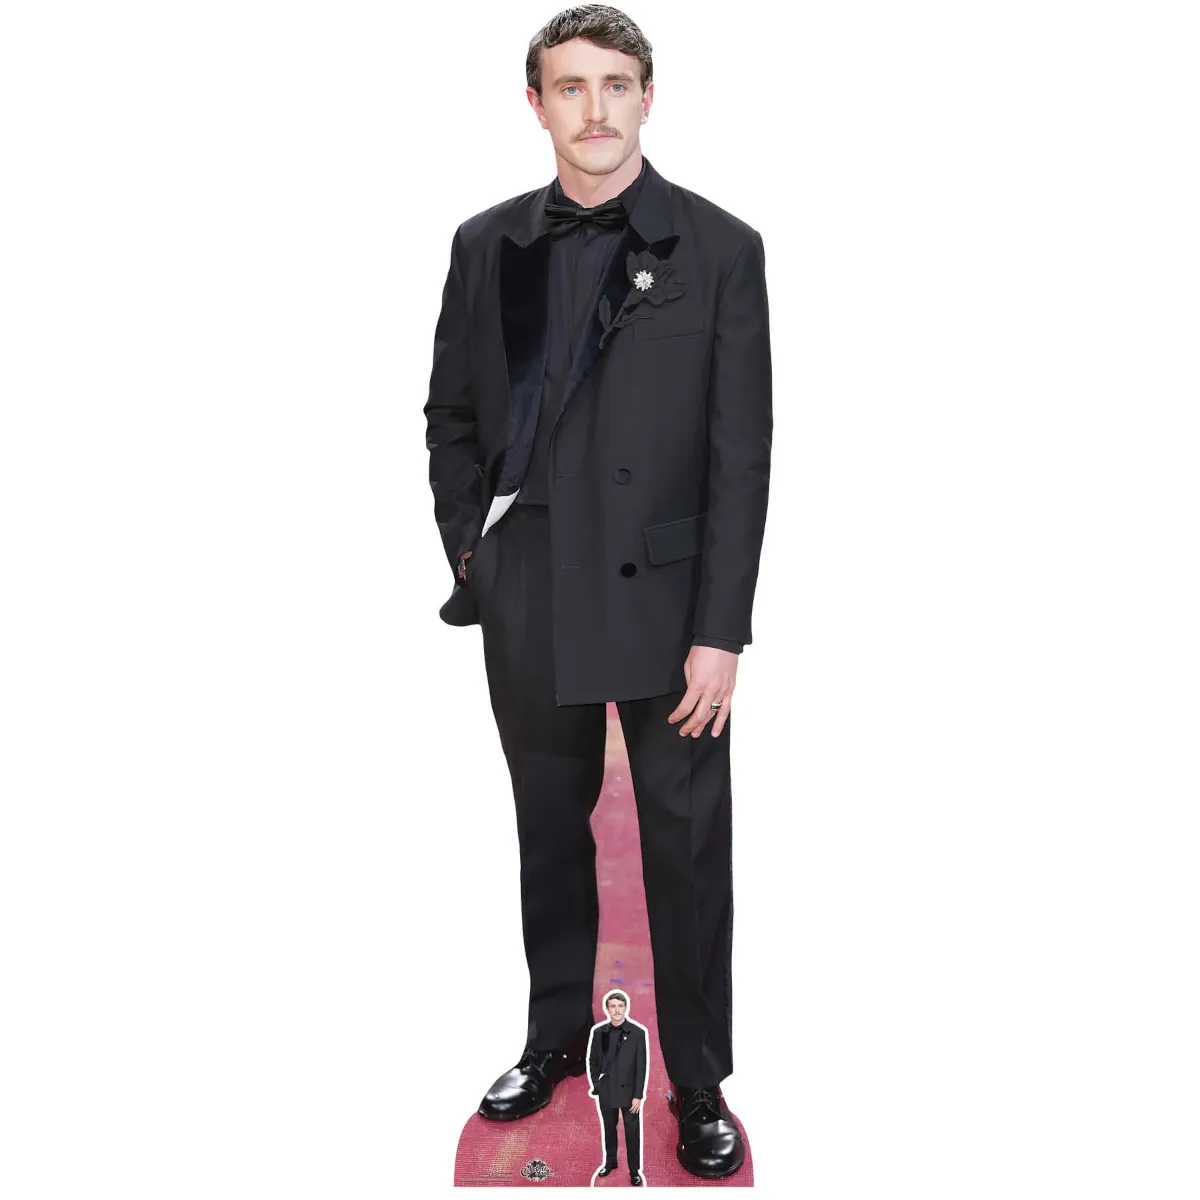 CS1074 Paul Mescal 'Black Suit' (Irish Actor) Lifesize + Mini Cardboard Cutout Standee Front